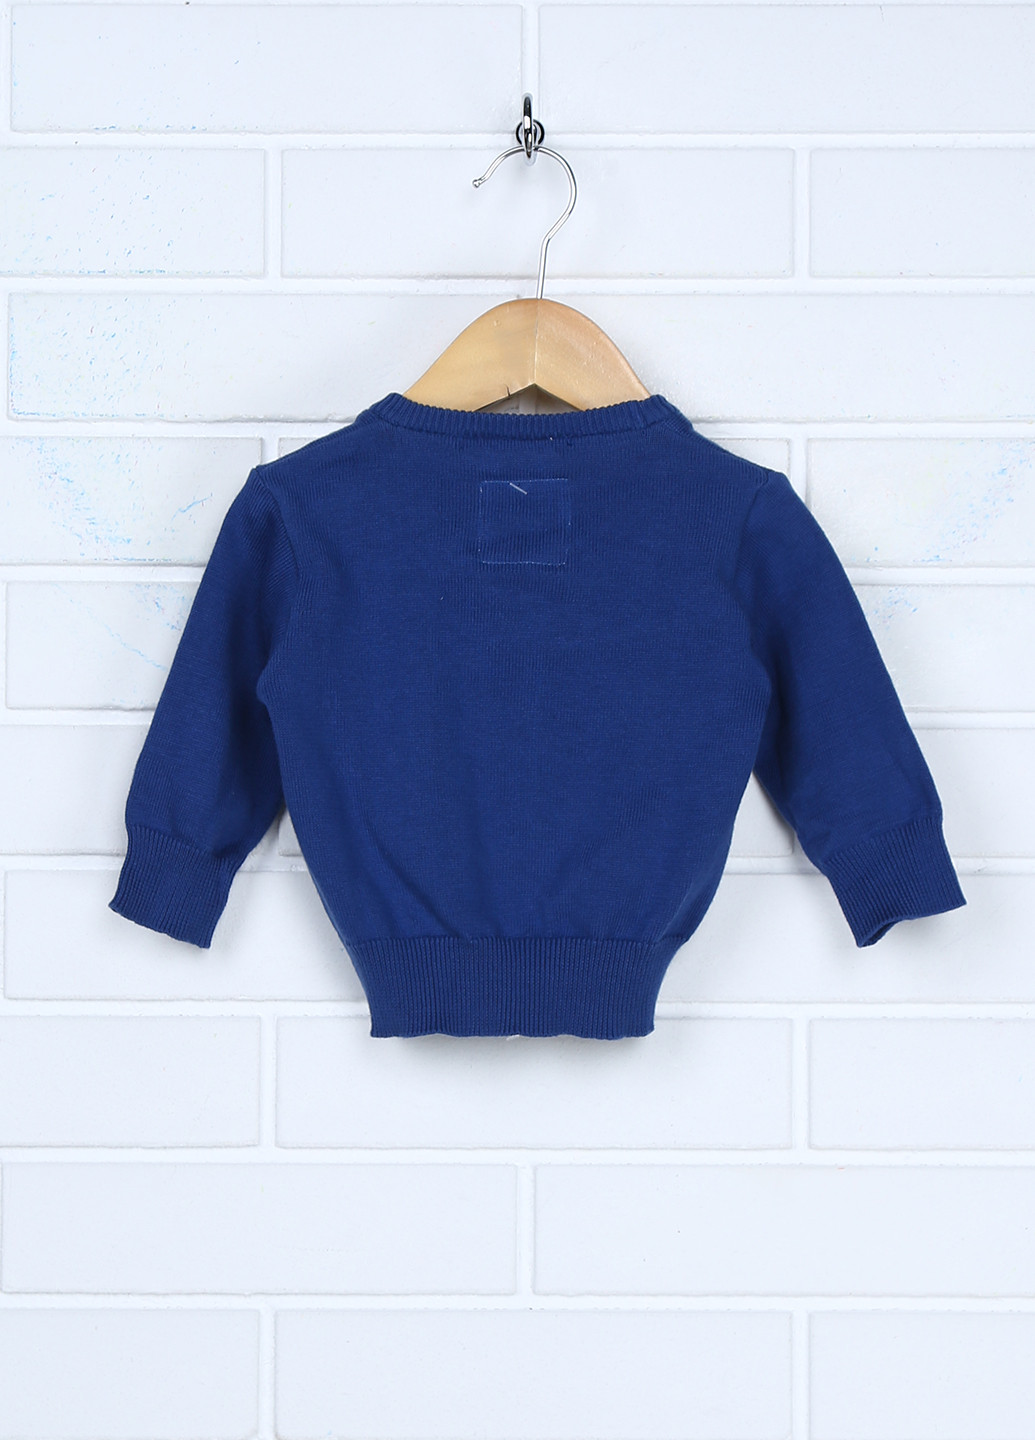 Синий демисезонный пуловер пуловер Kitten